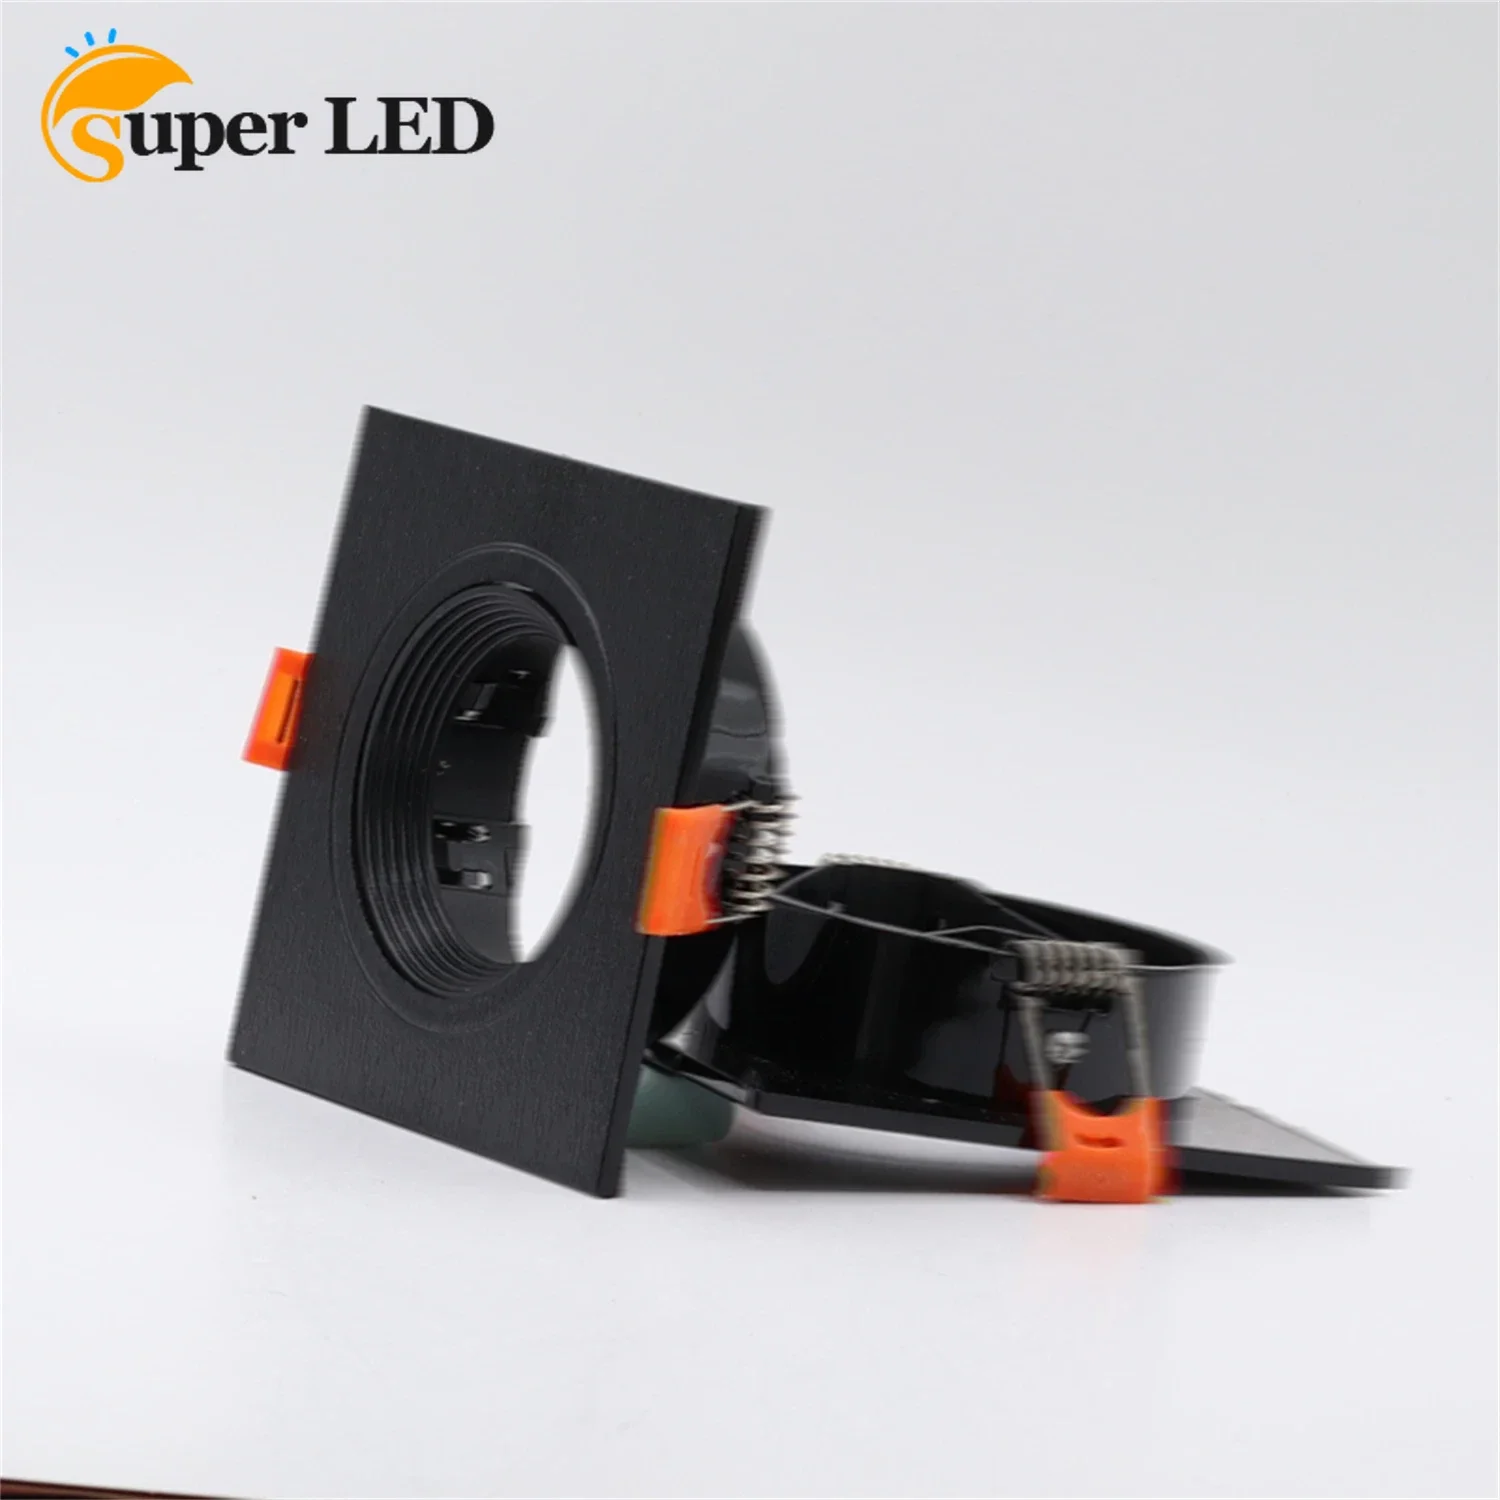 

Lighting Accessories Downlight Recessed Spotlight Plastic Square Light Frame Fixture Holder Adjustable Cutout 75mm LED GU10 MR16